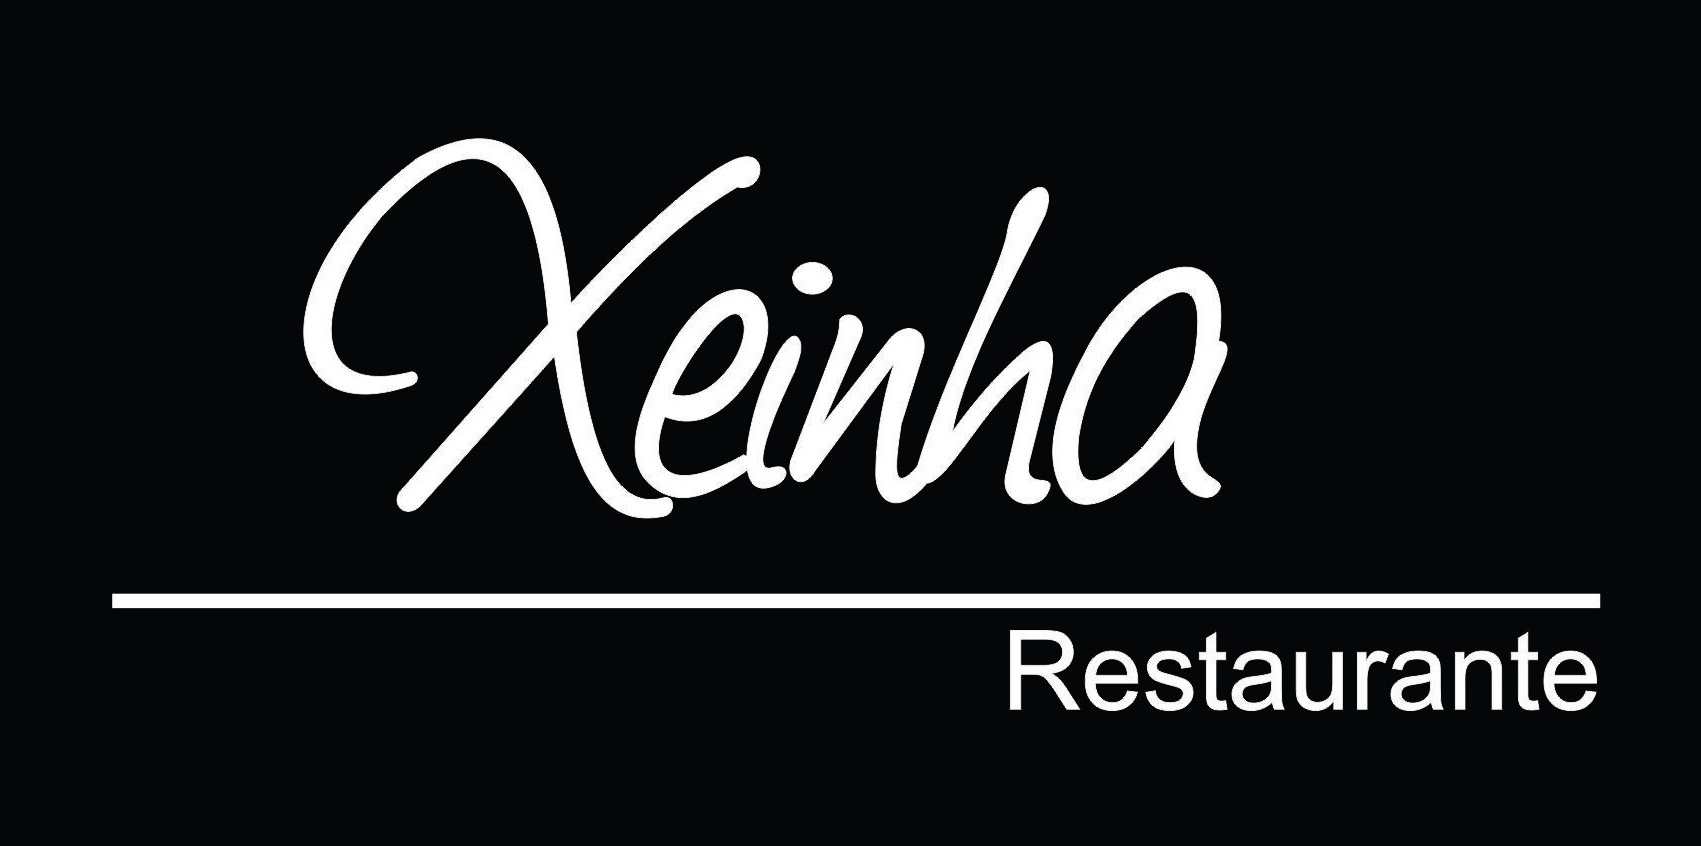 Xeinha Restaurante comida quilo RJ